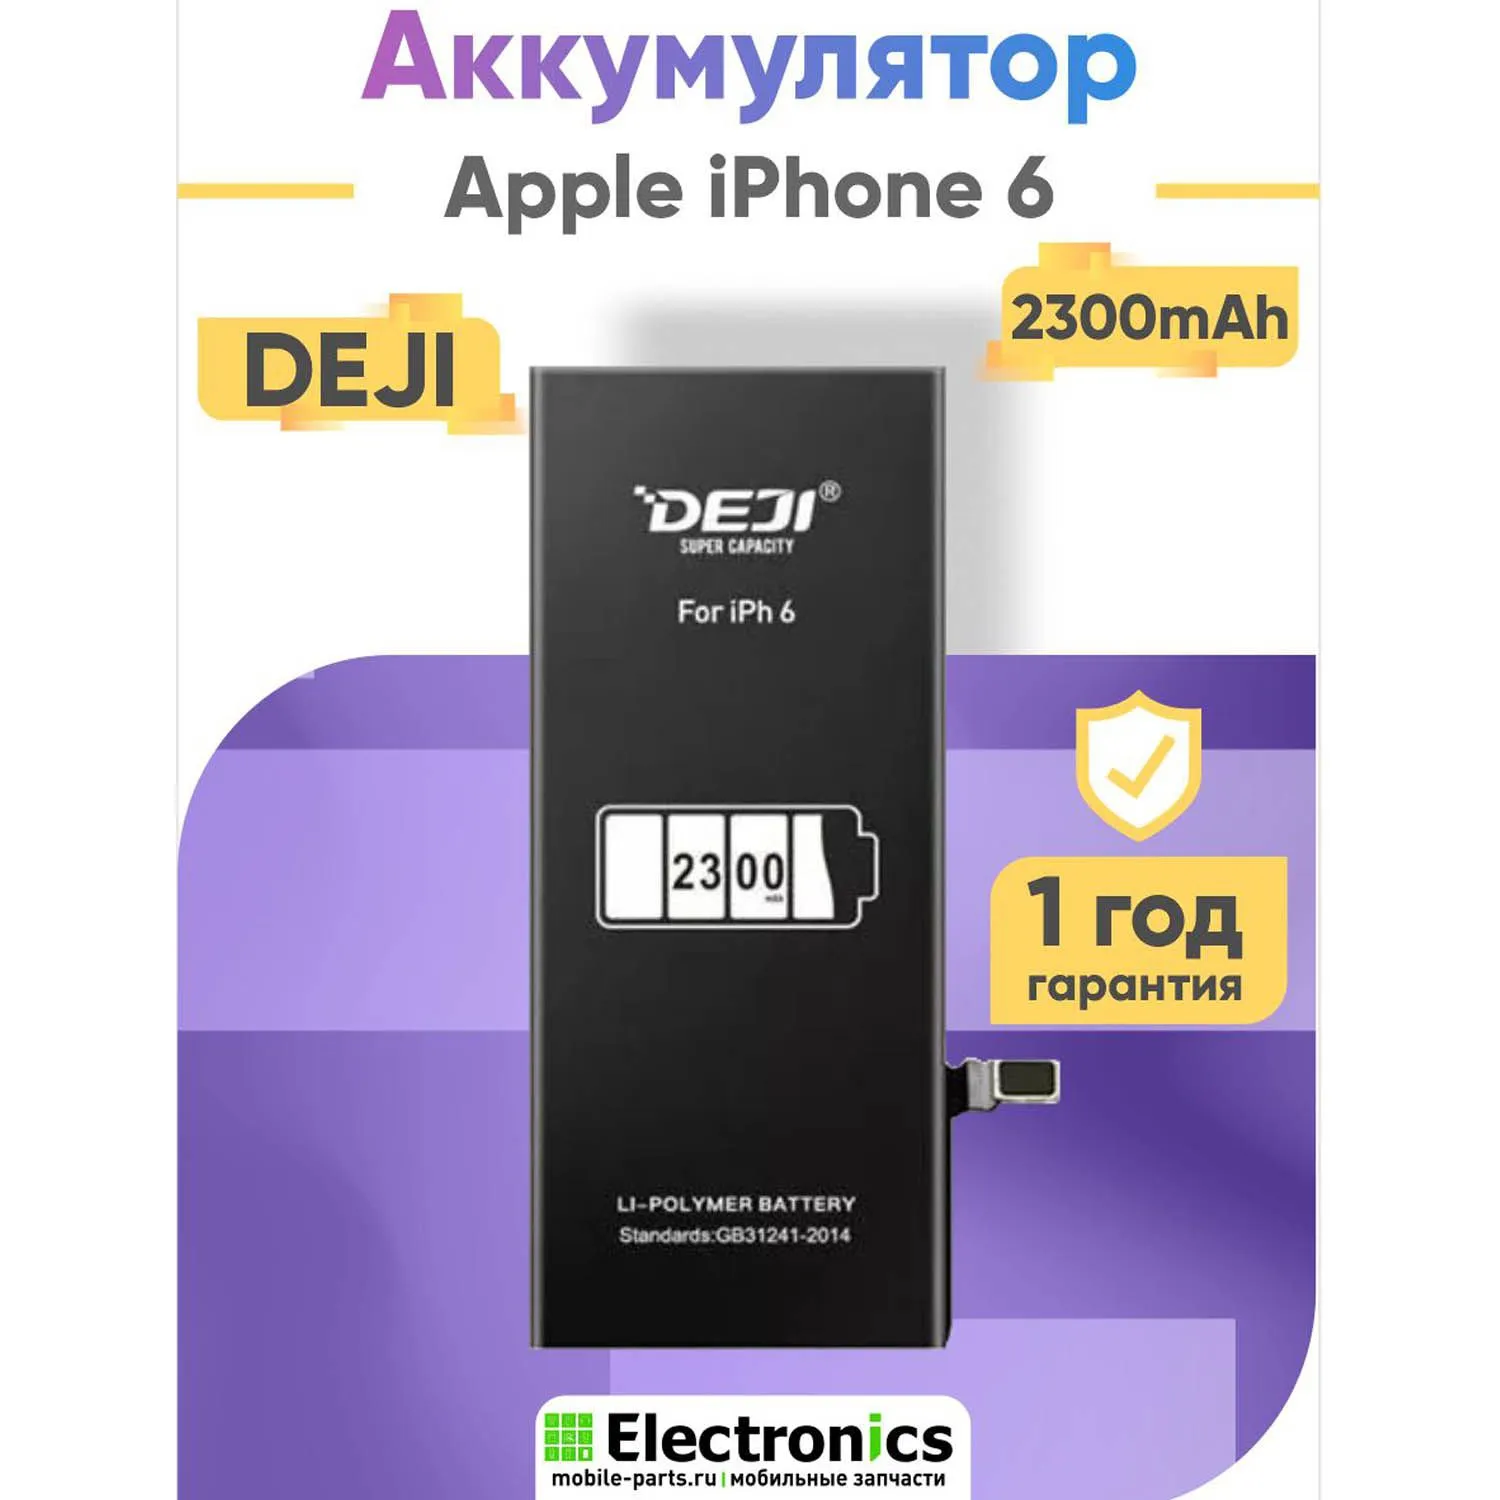 Аккумулятор DEJI Apple iPhone 6 повышенной ёмкости 2300mAh